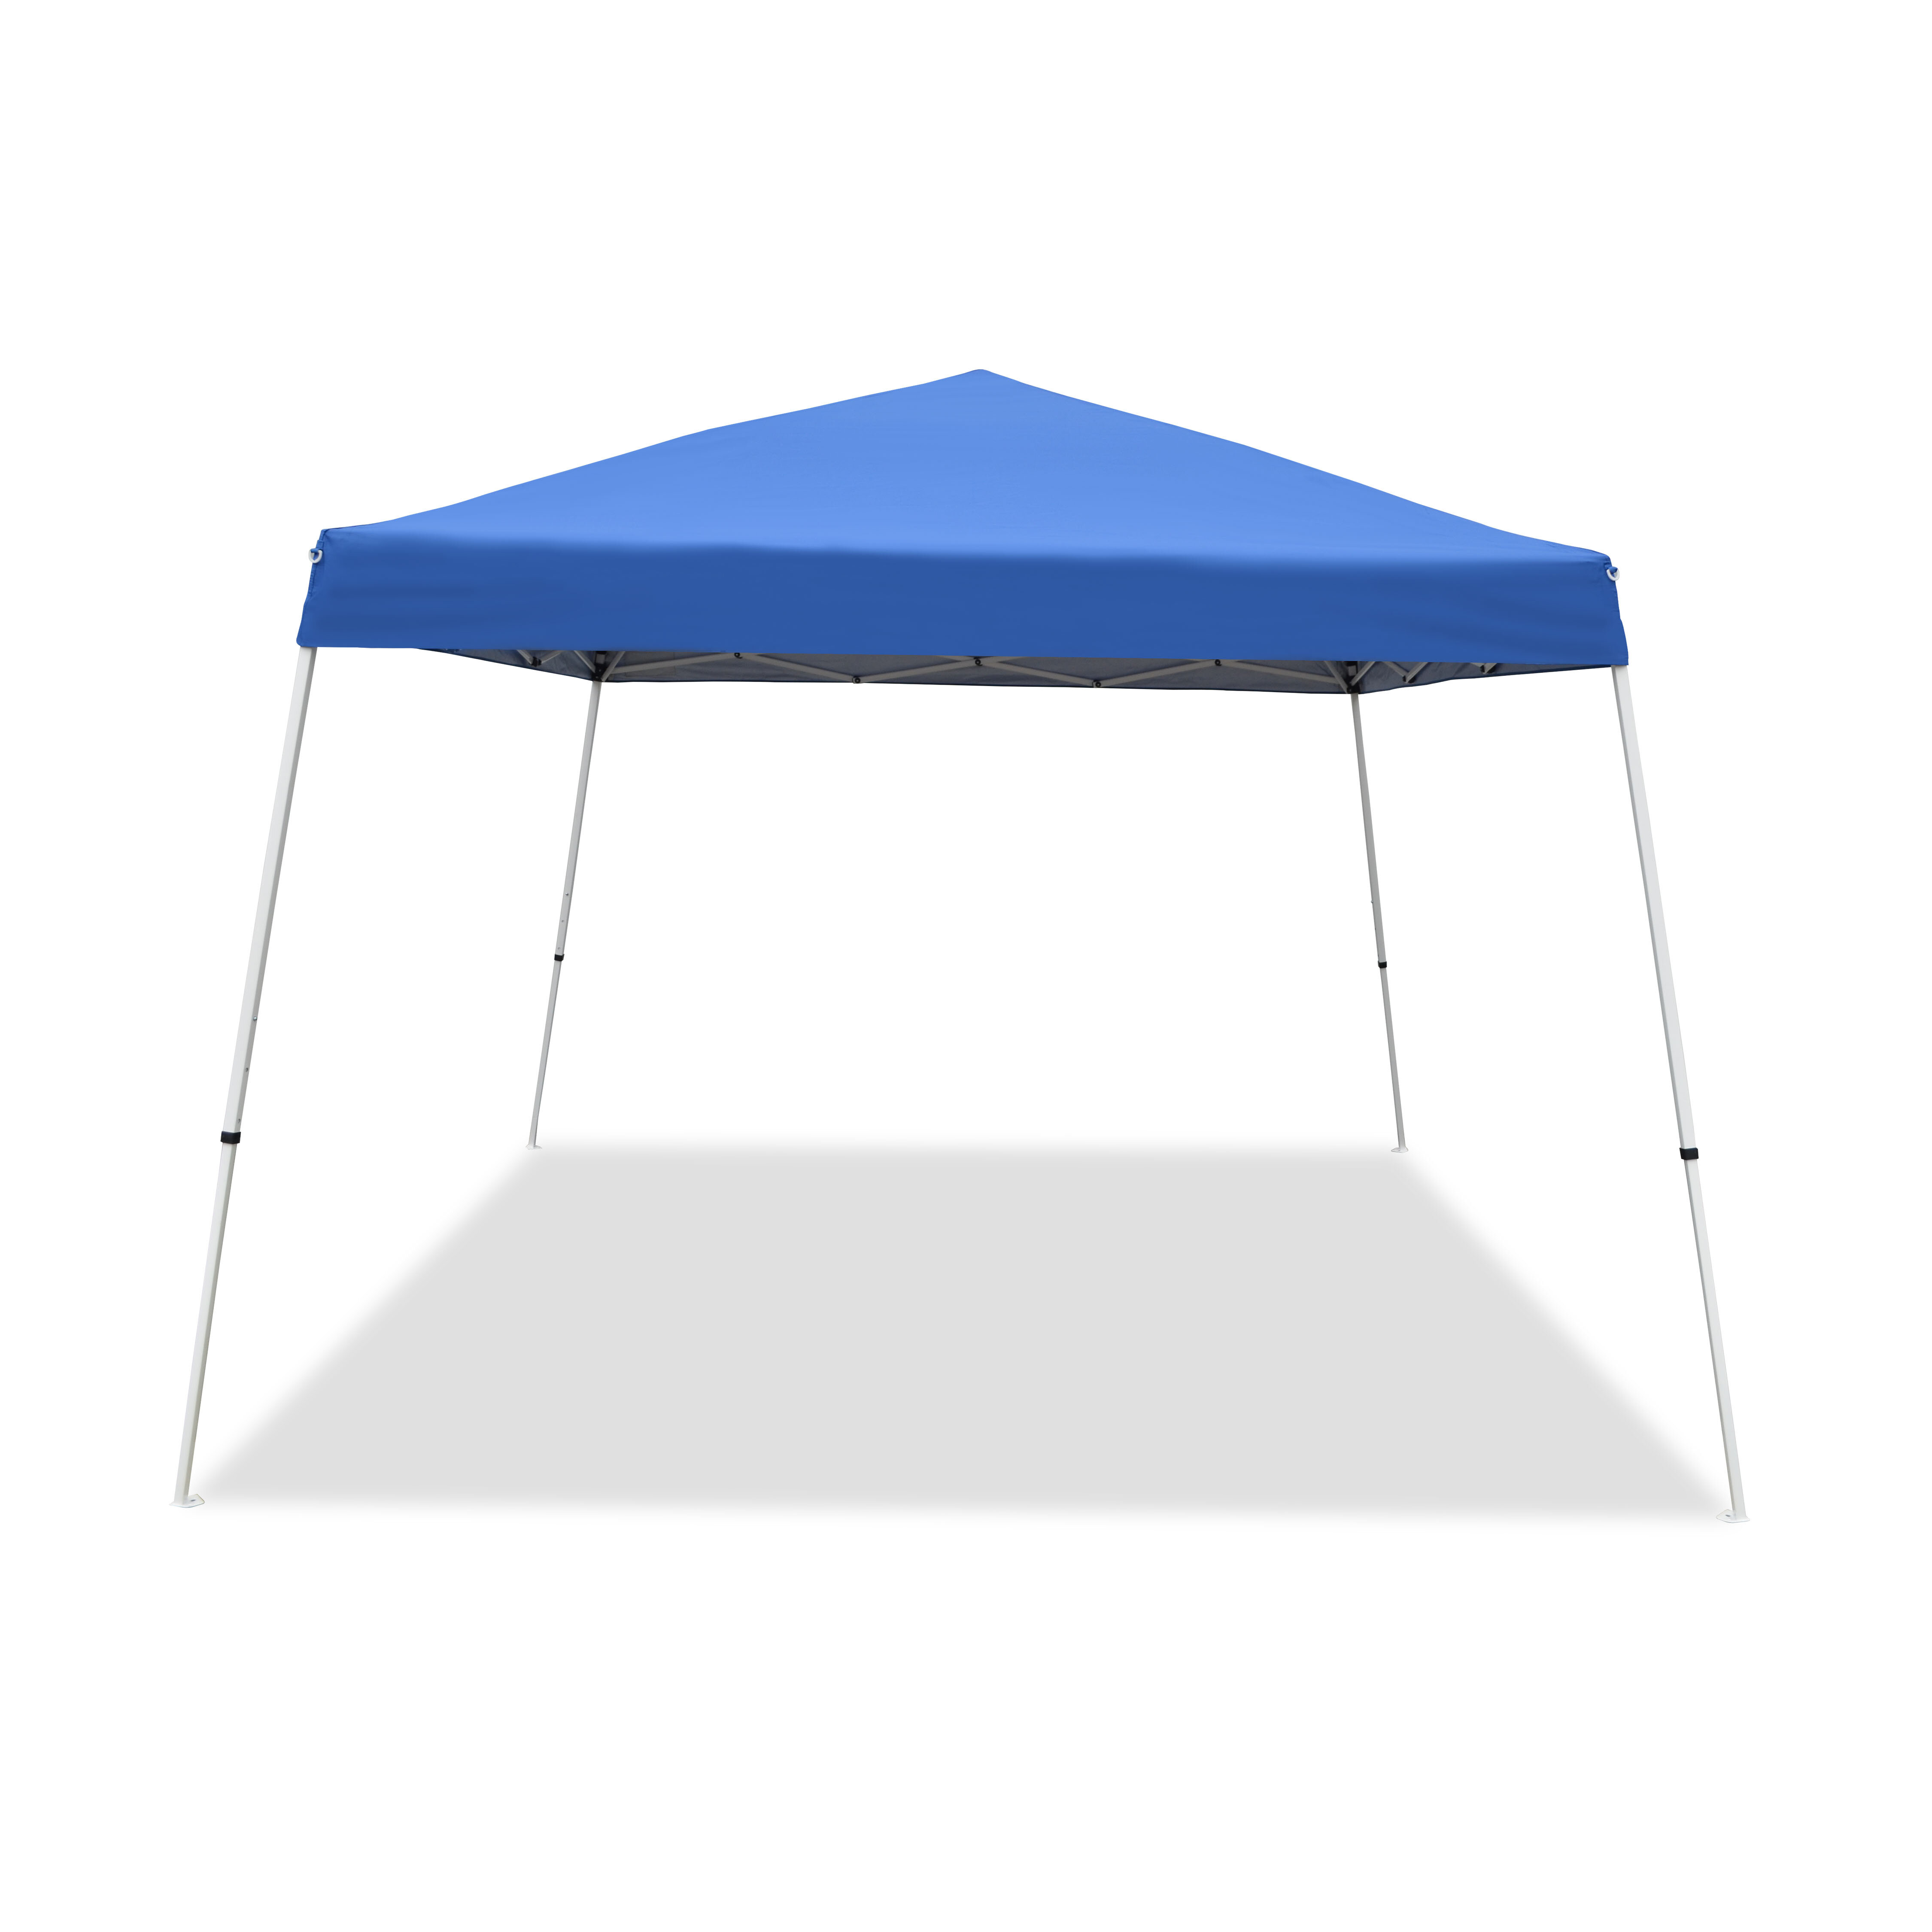 Caravan Canopy V Series 2 Pro 10 X 10 Entry Level Straight Leg Canopy Blue Yard Color Home Garden